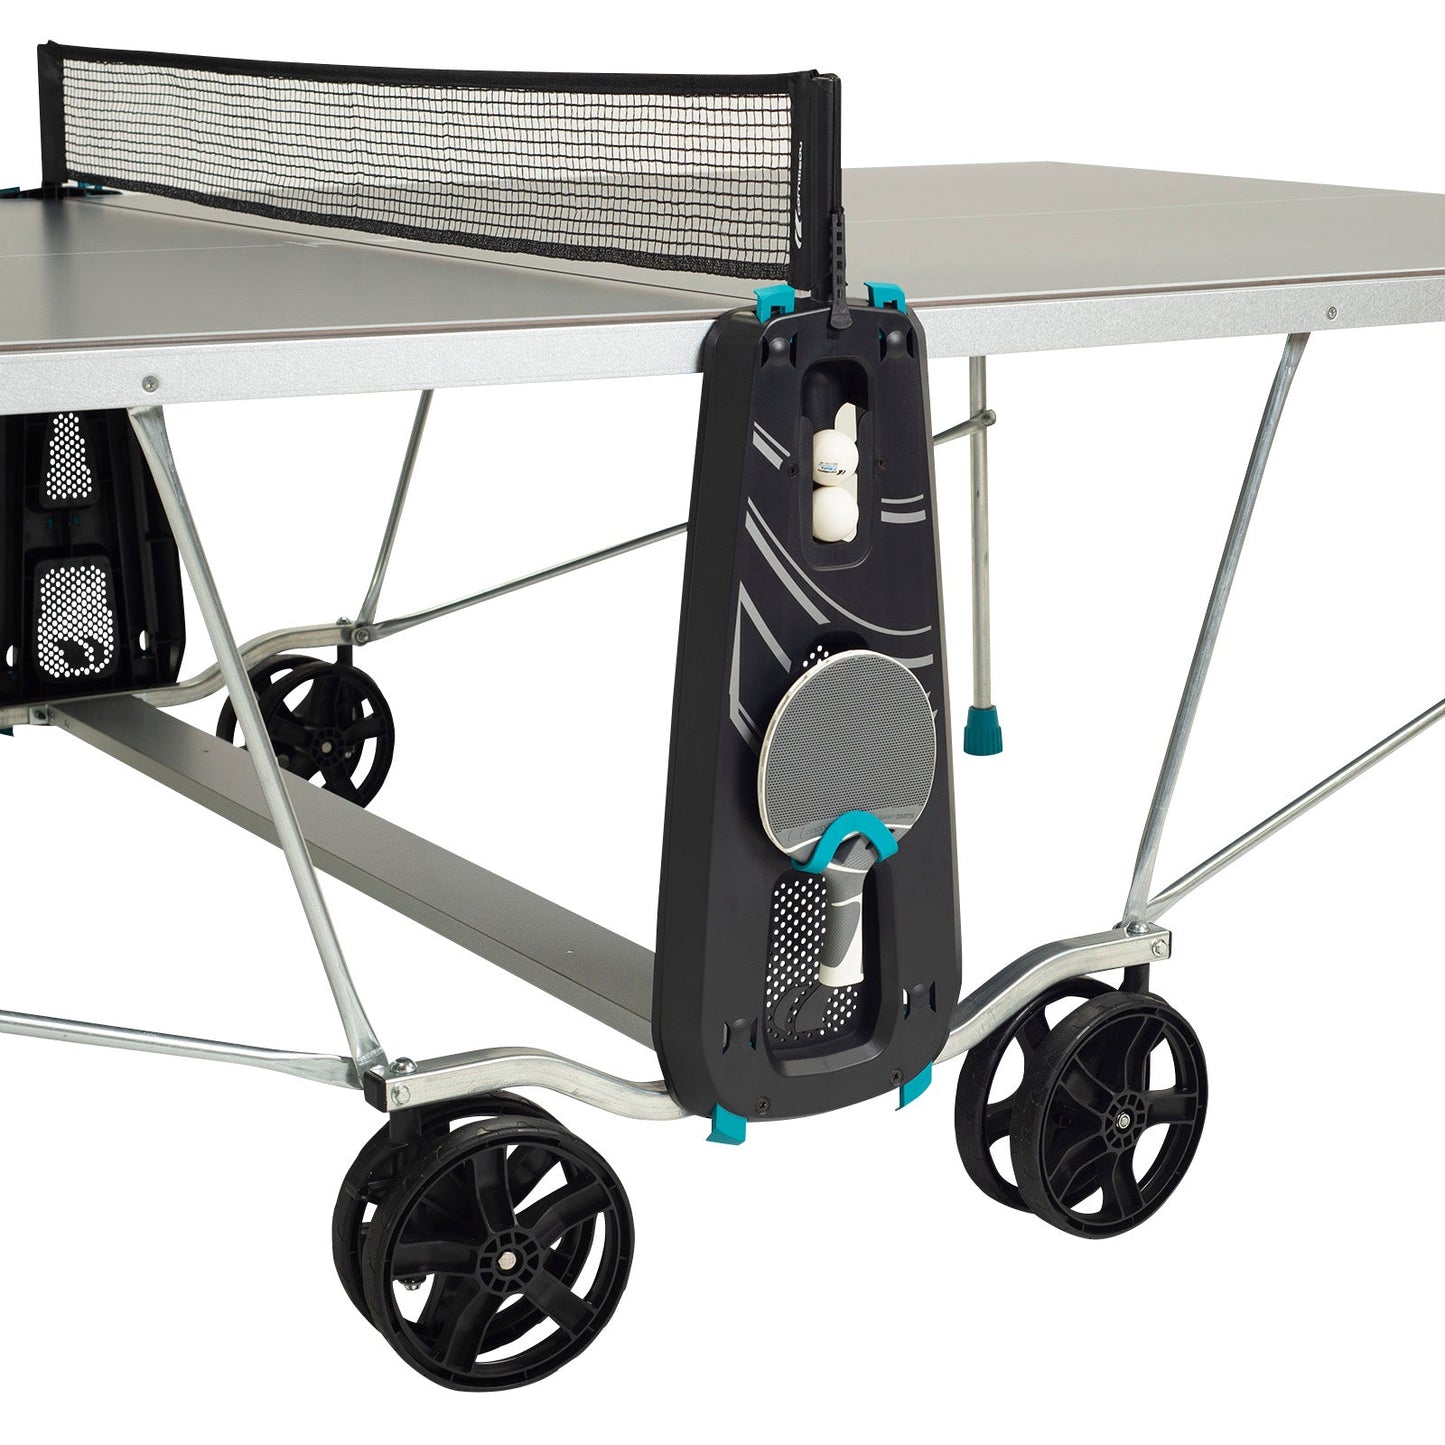 Cornilleau 100X Sport Blue Outdoor Table Tennis Table